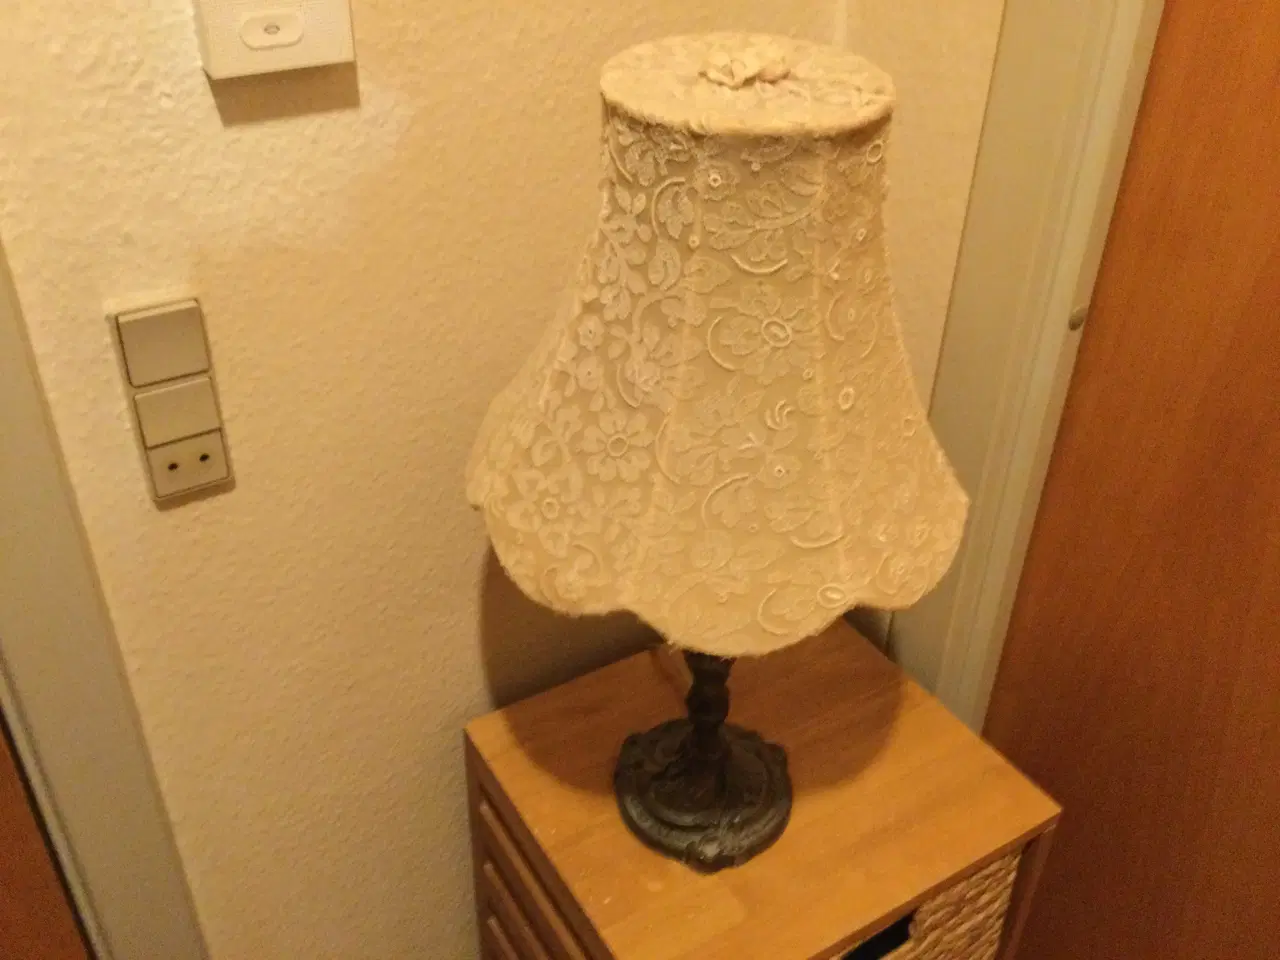 Billede 2 - Lampe